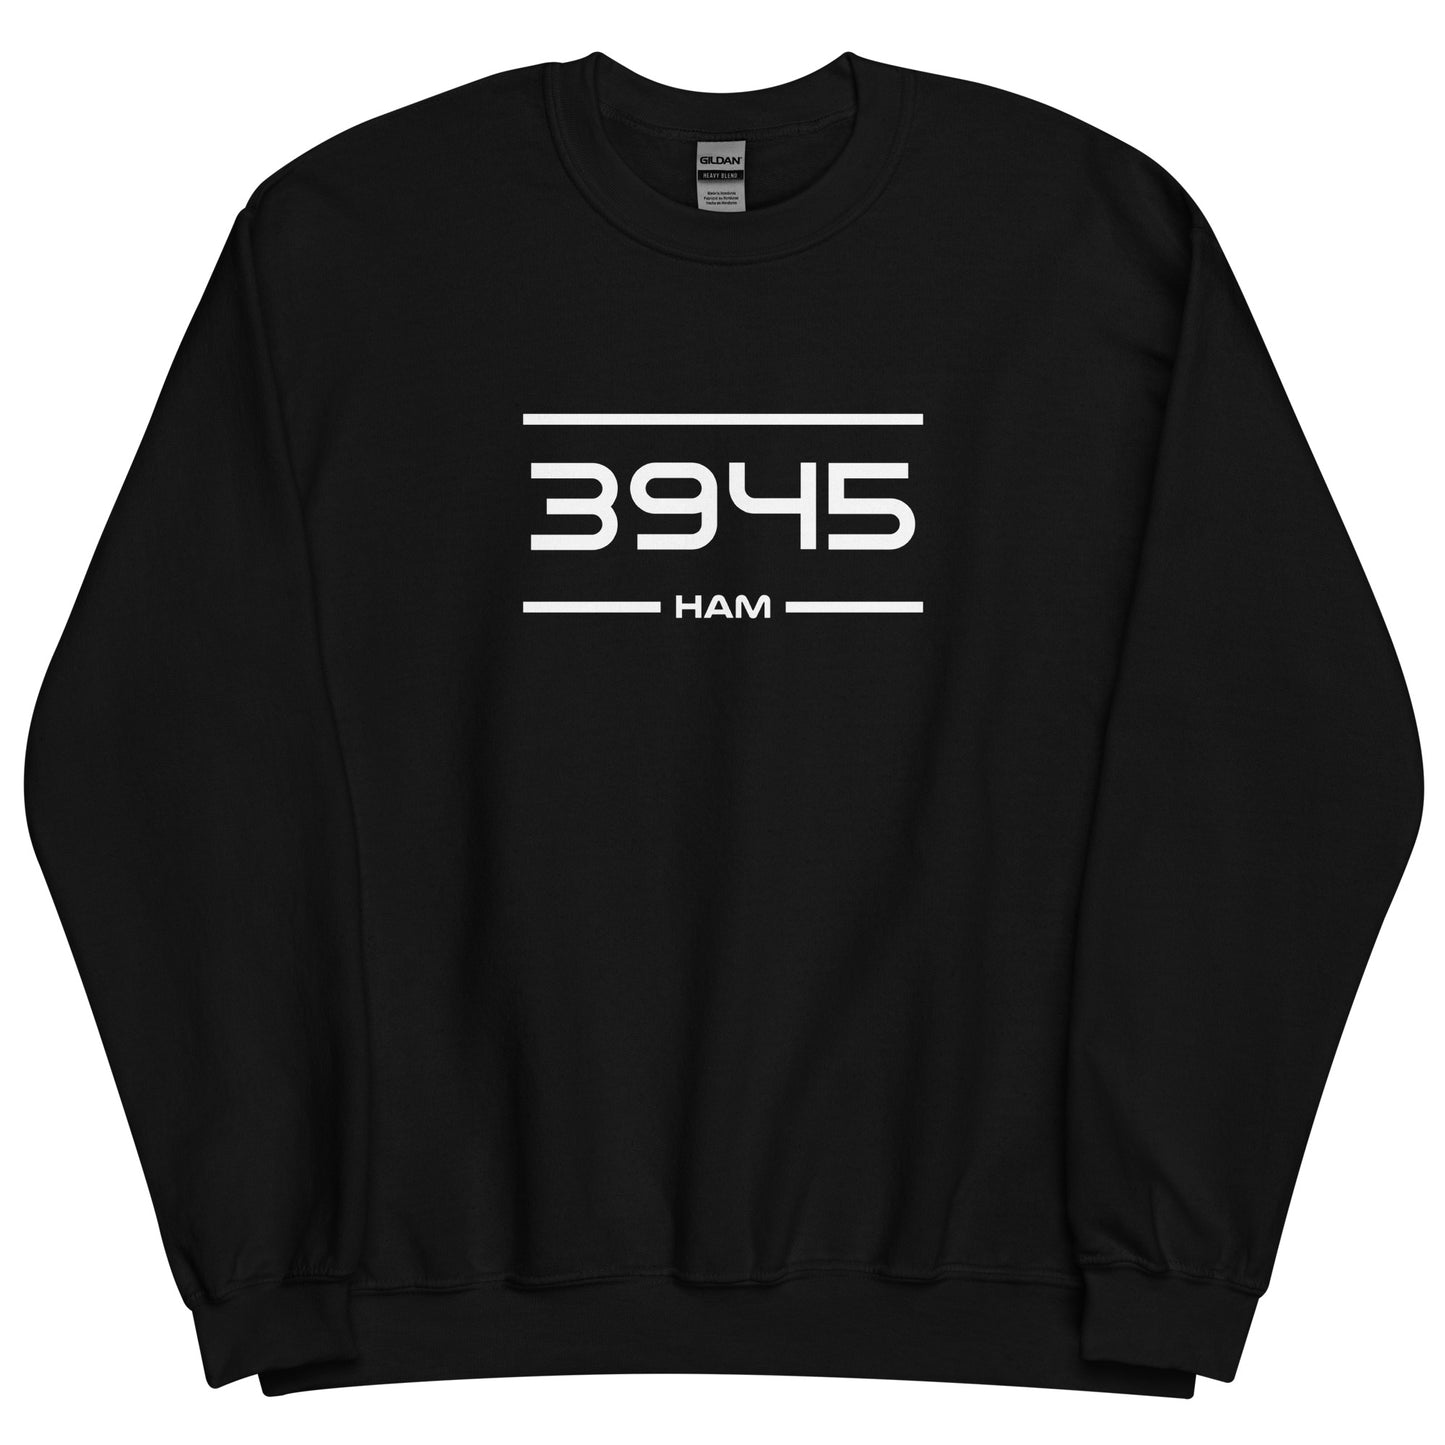 Sweater - 3945 - Ham (M/V)